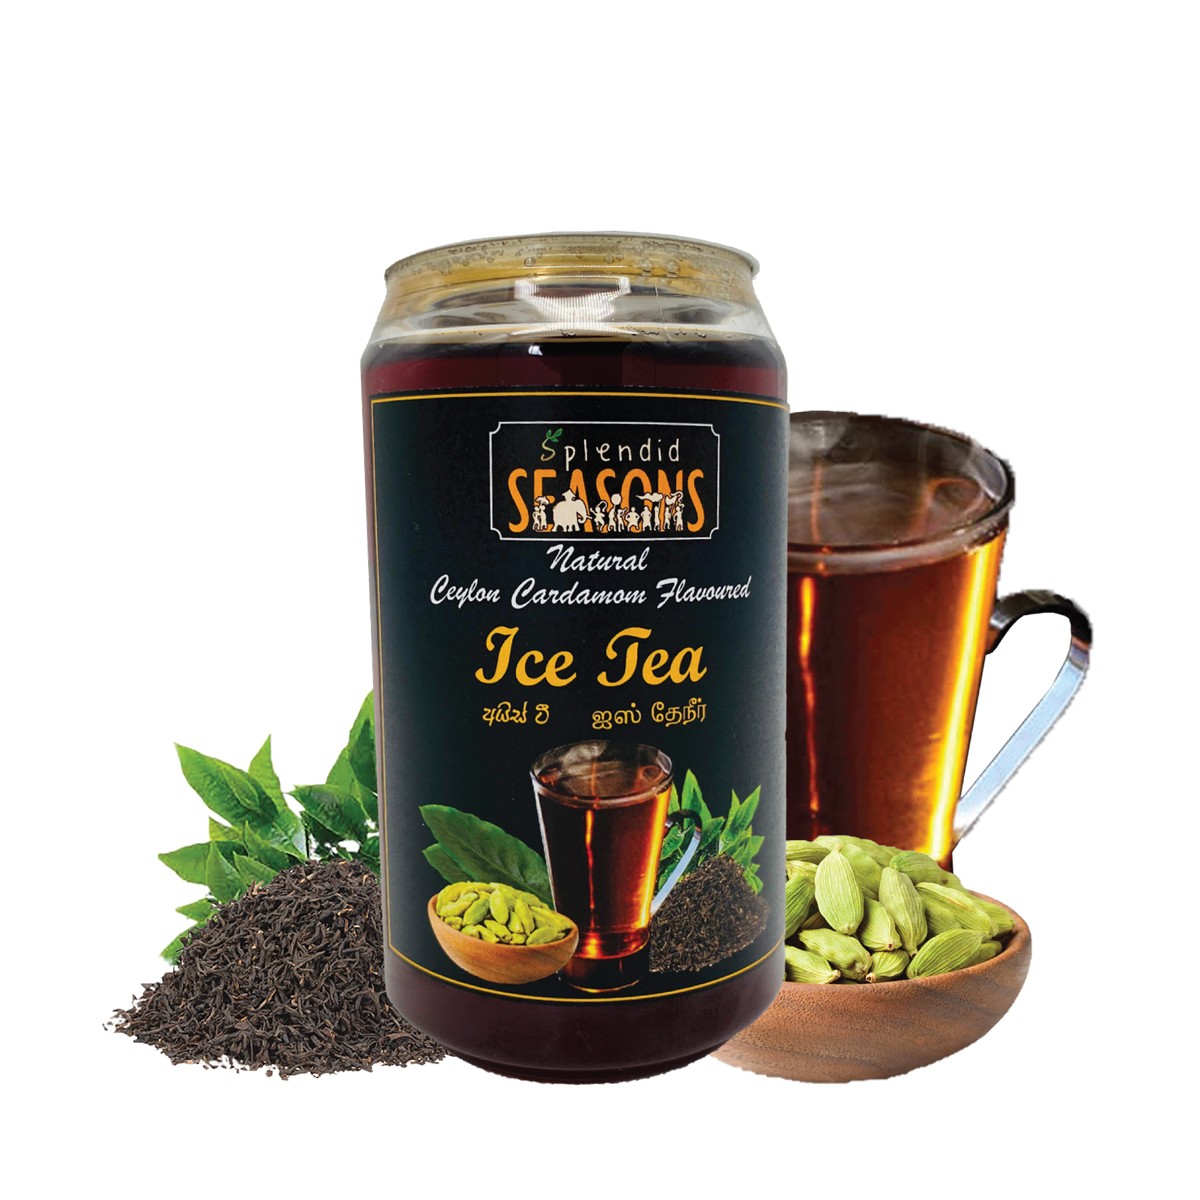 Natural Ceylon Cardamom Flavoured Ice Tea